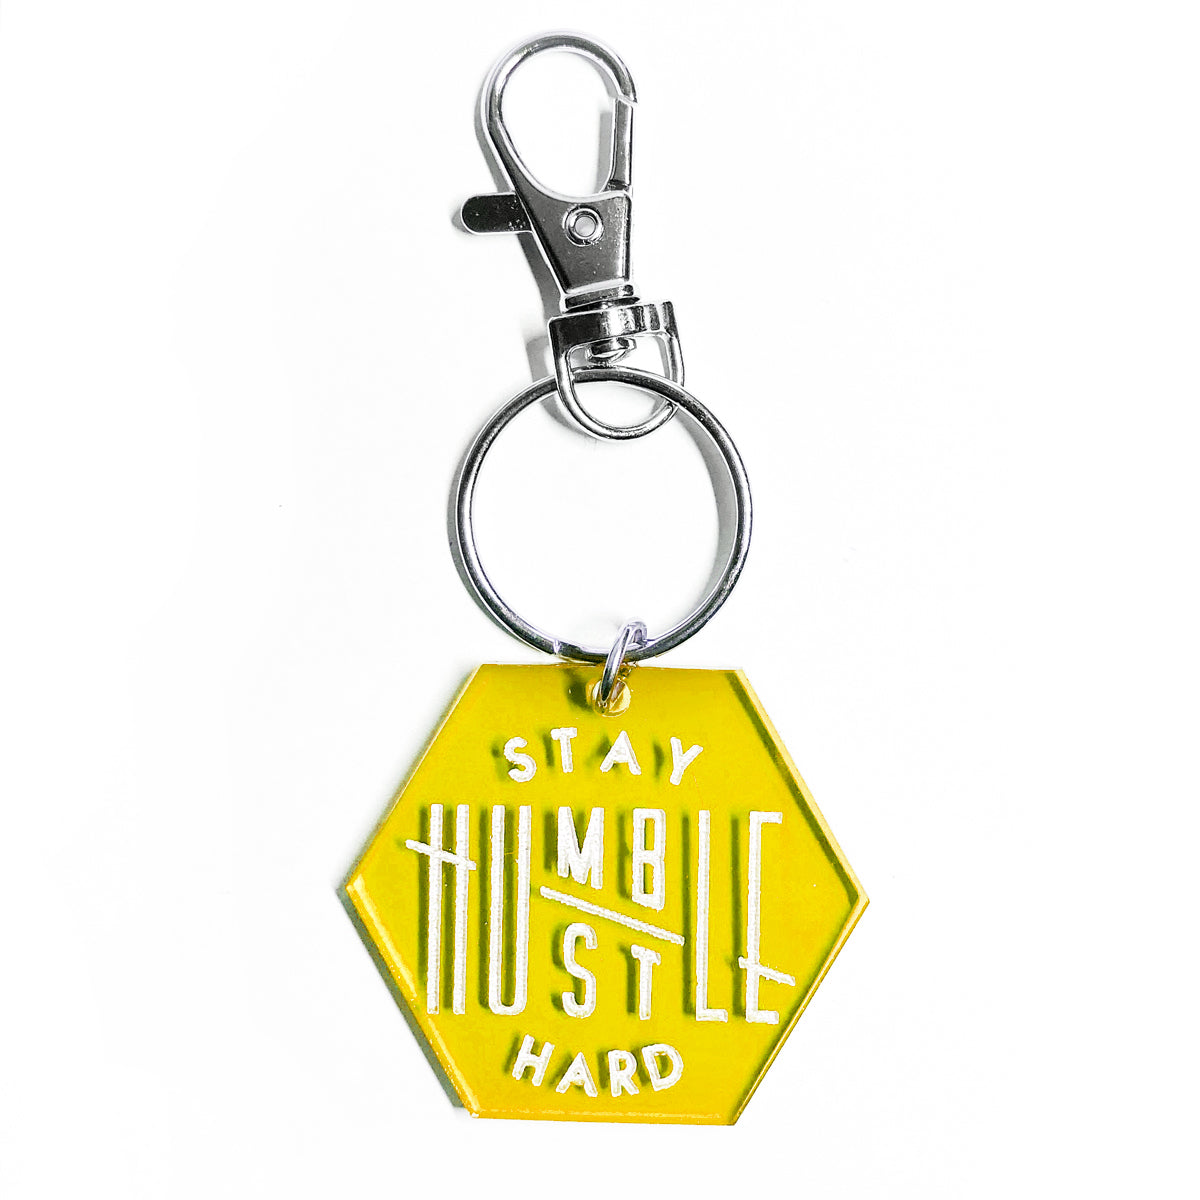 Stay Humble / Hustle Hard Acrylic Hexagon Keychain - Translucent Yellow